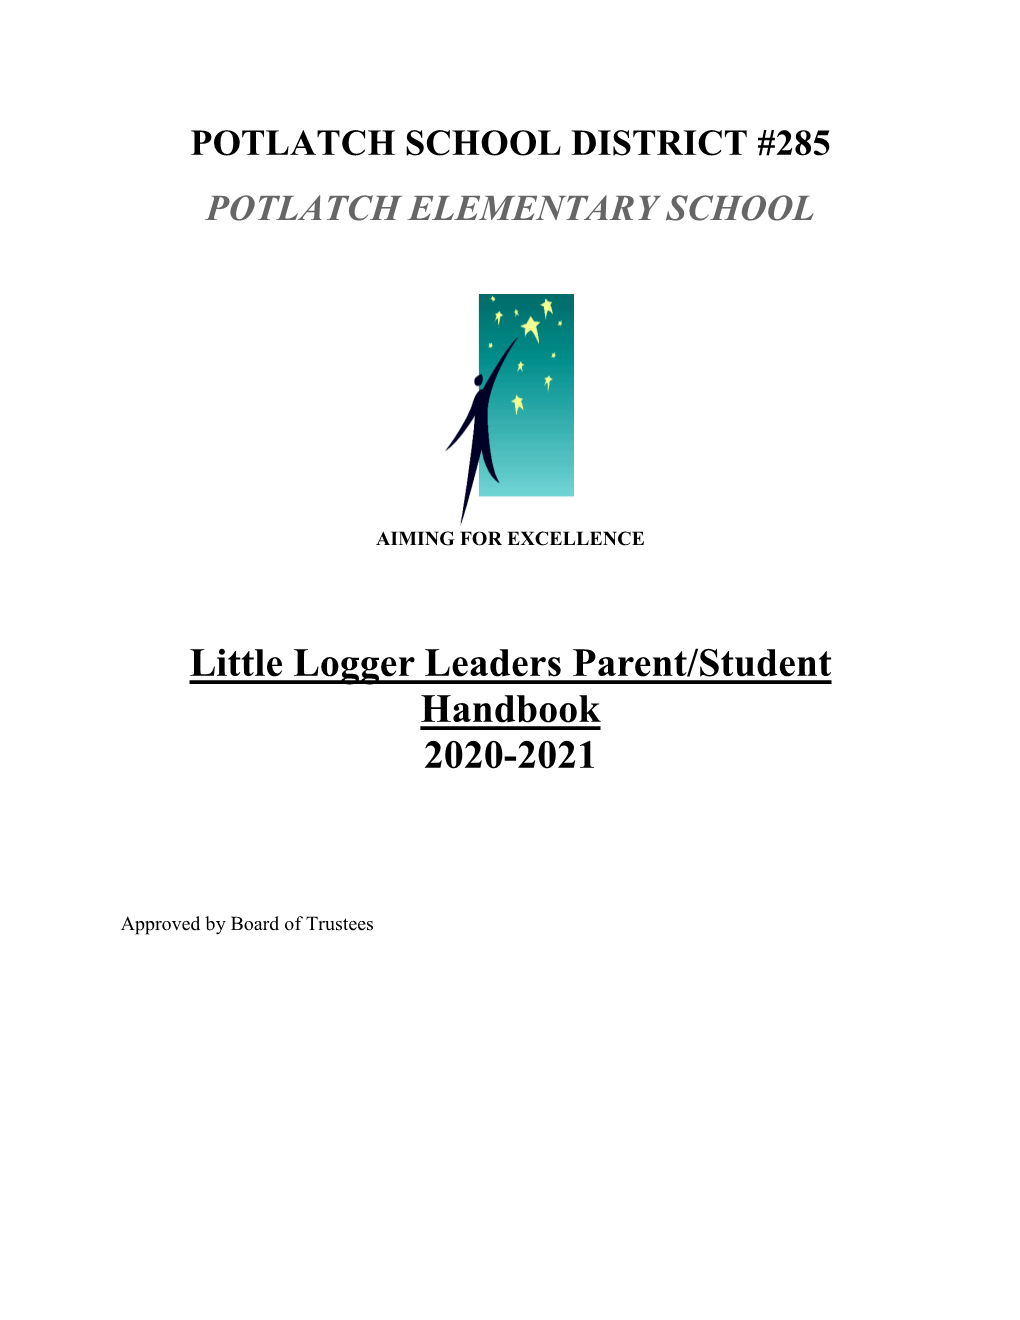 2020-2021 Elementary Handbook